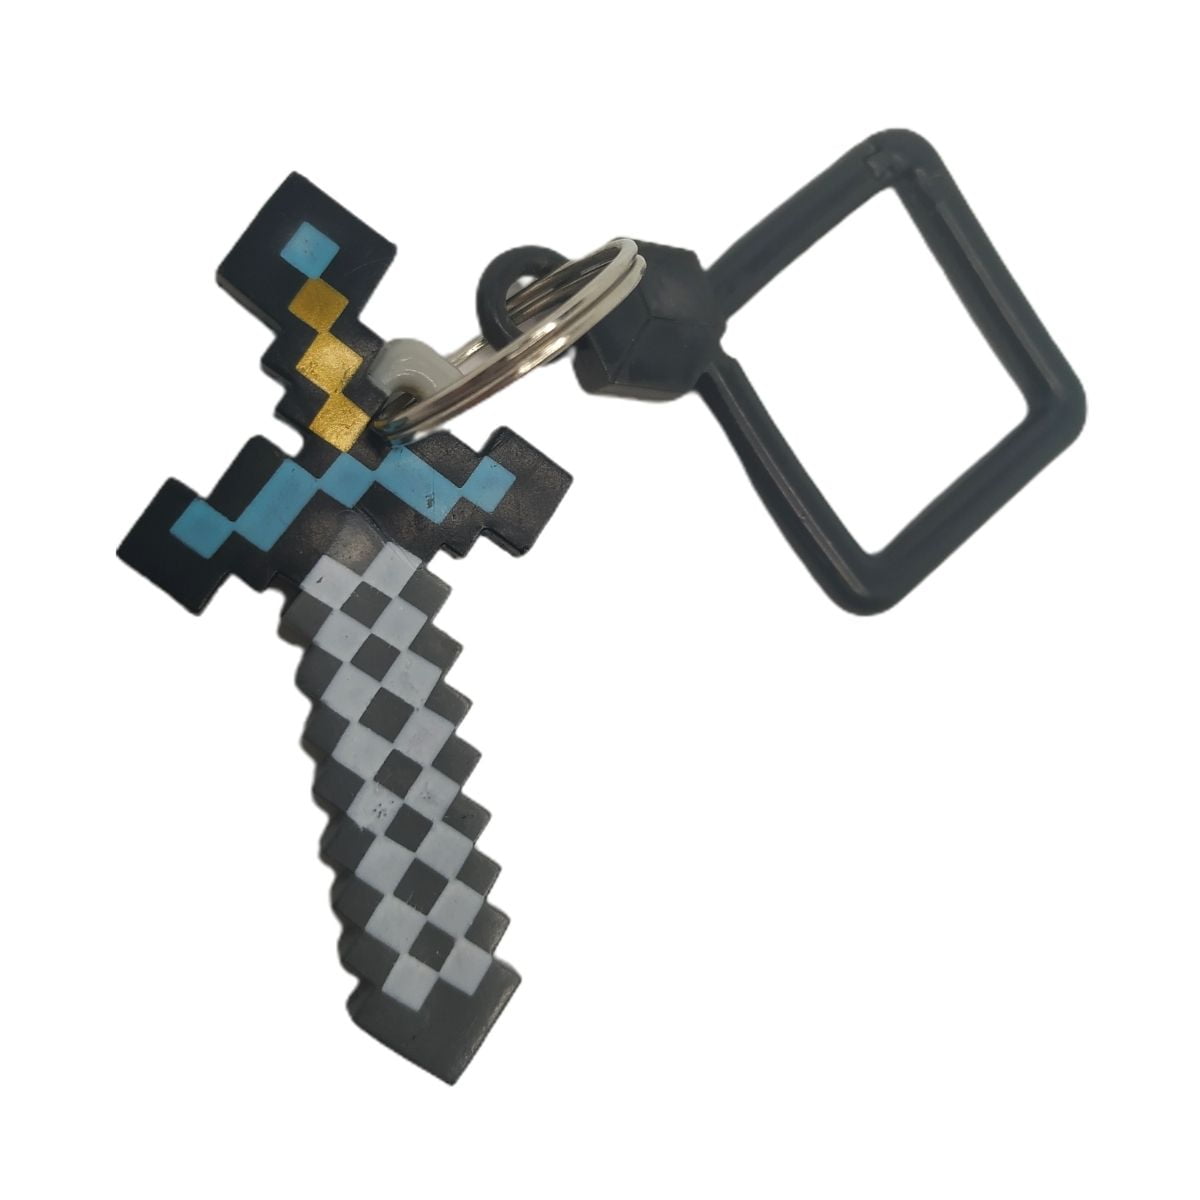 Minecraft anahtarlik kilic 2 - minecraft kılıç anahtarlık - figurex